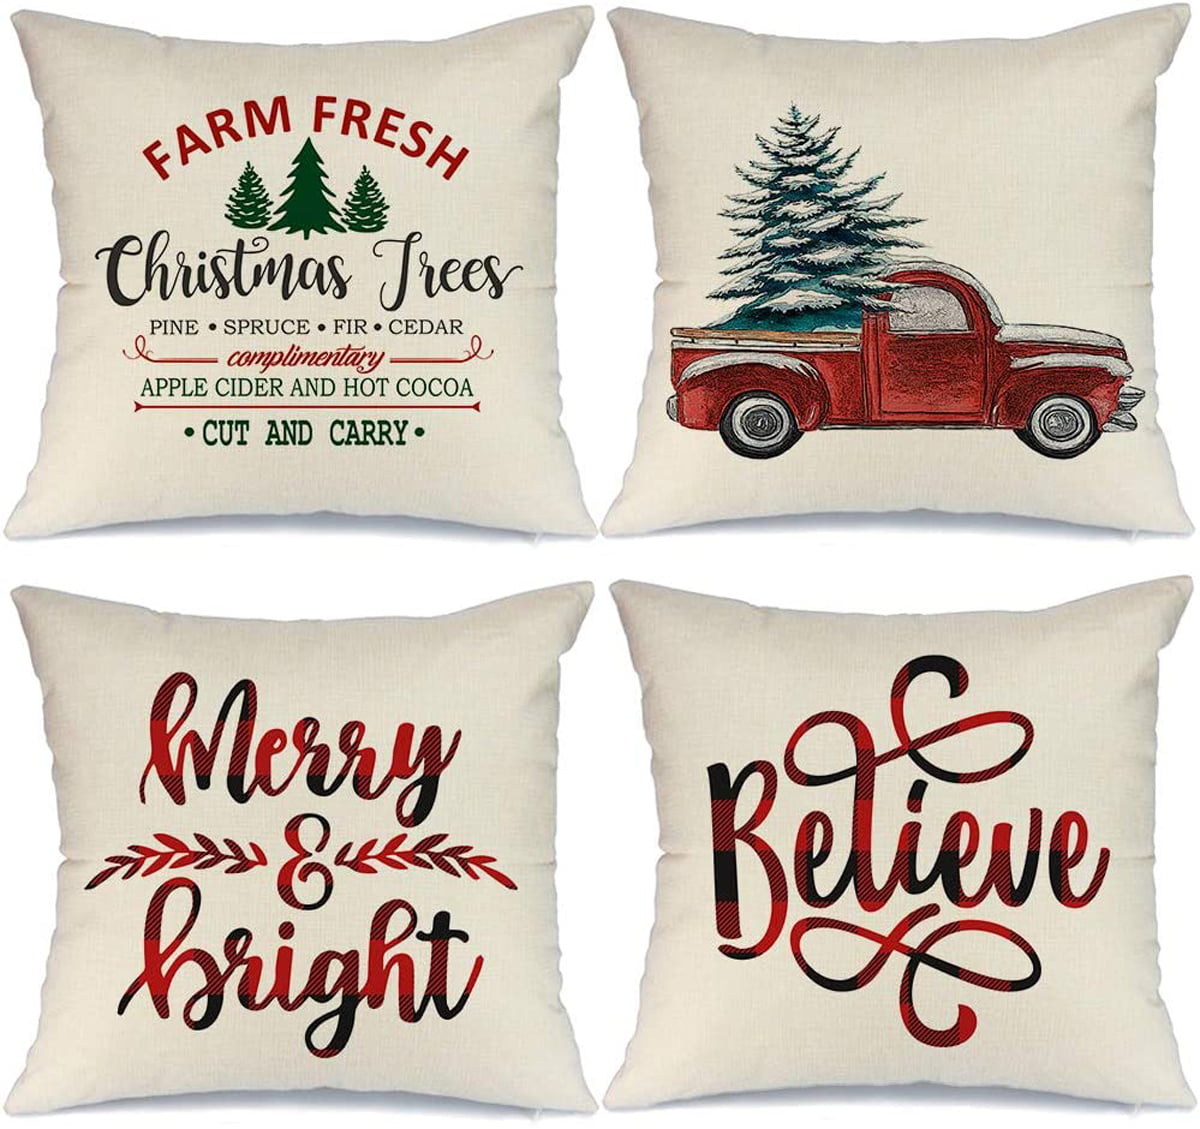 Personalized Farmhouse Style Throw Pillow Covers 18x18 (Farm